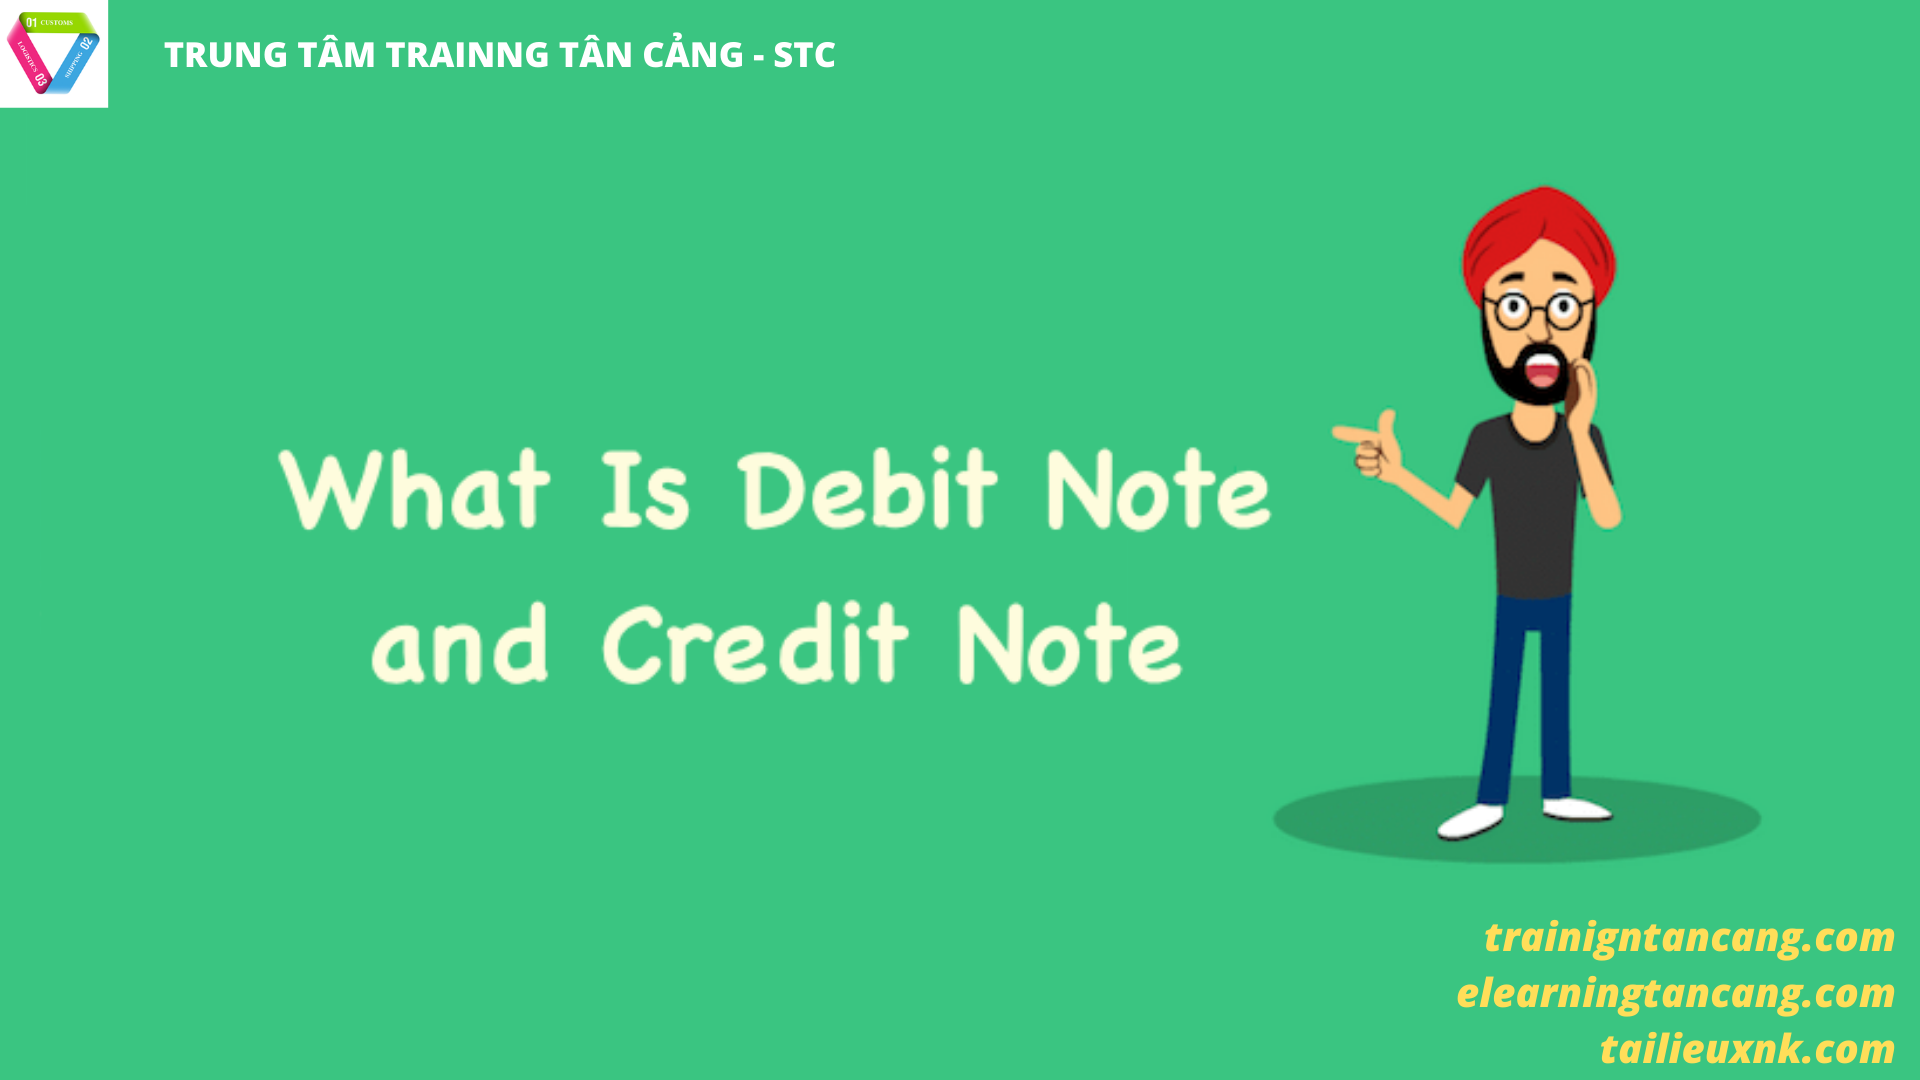 Debit Note Là Gì?  So Sánh Giữa Debit Note Và Credit Note